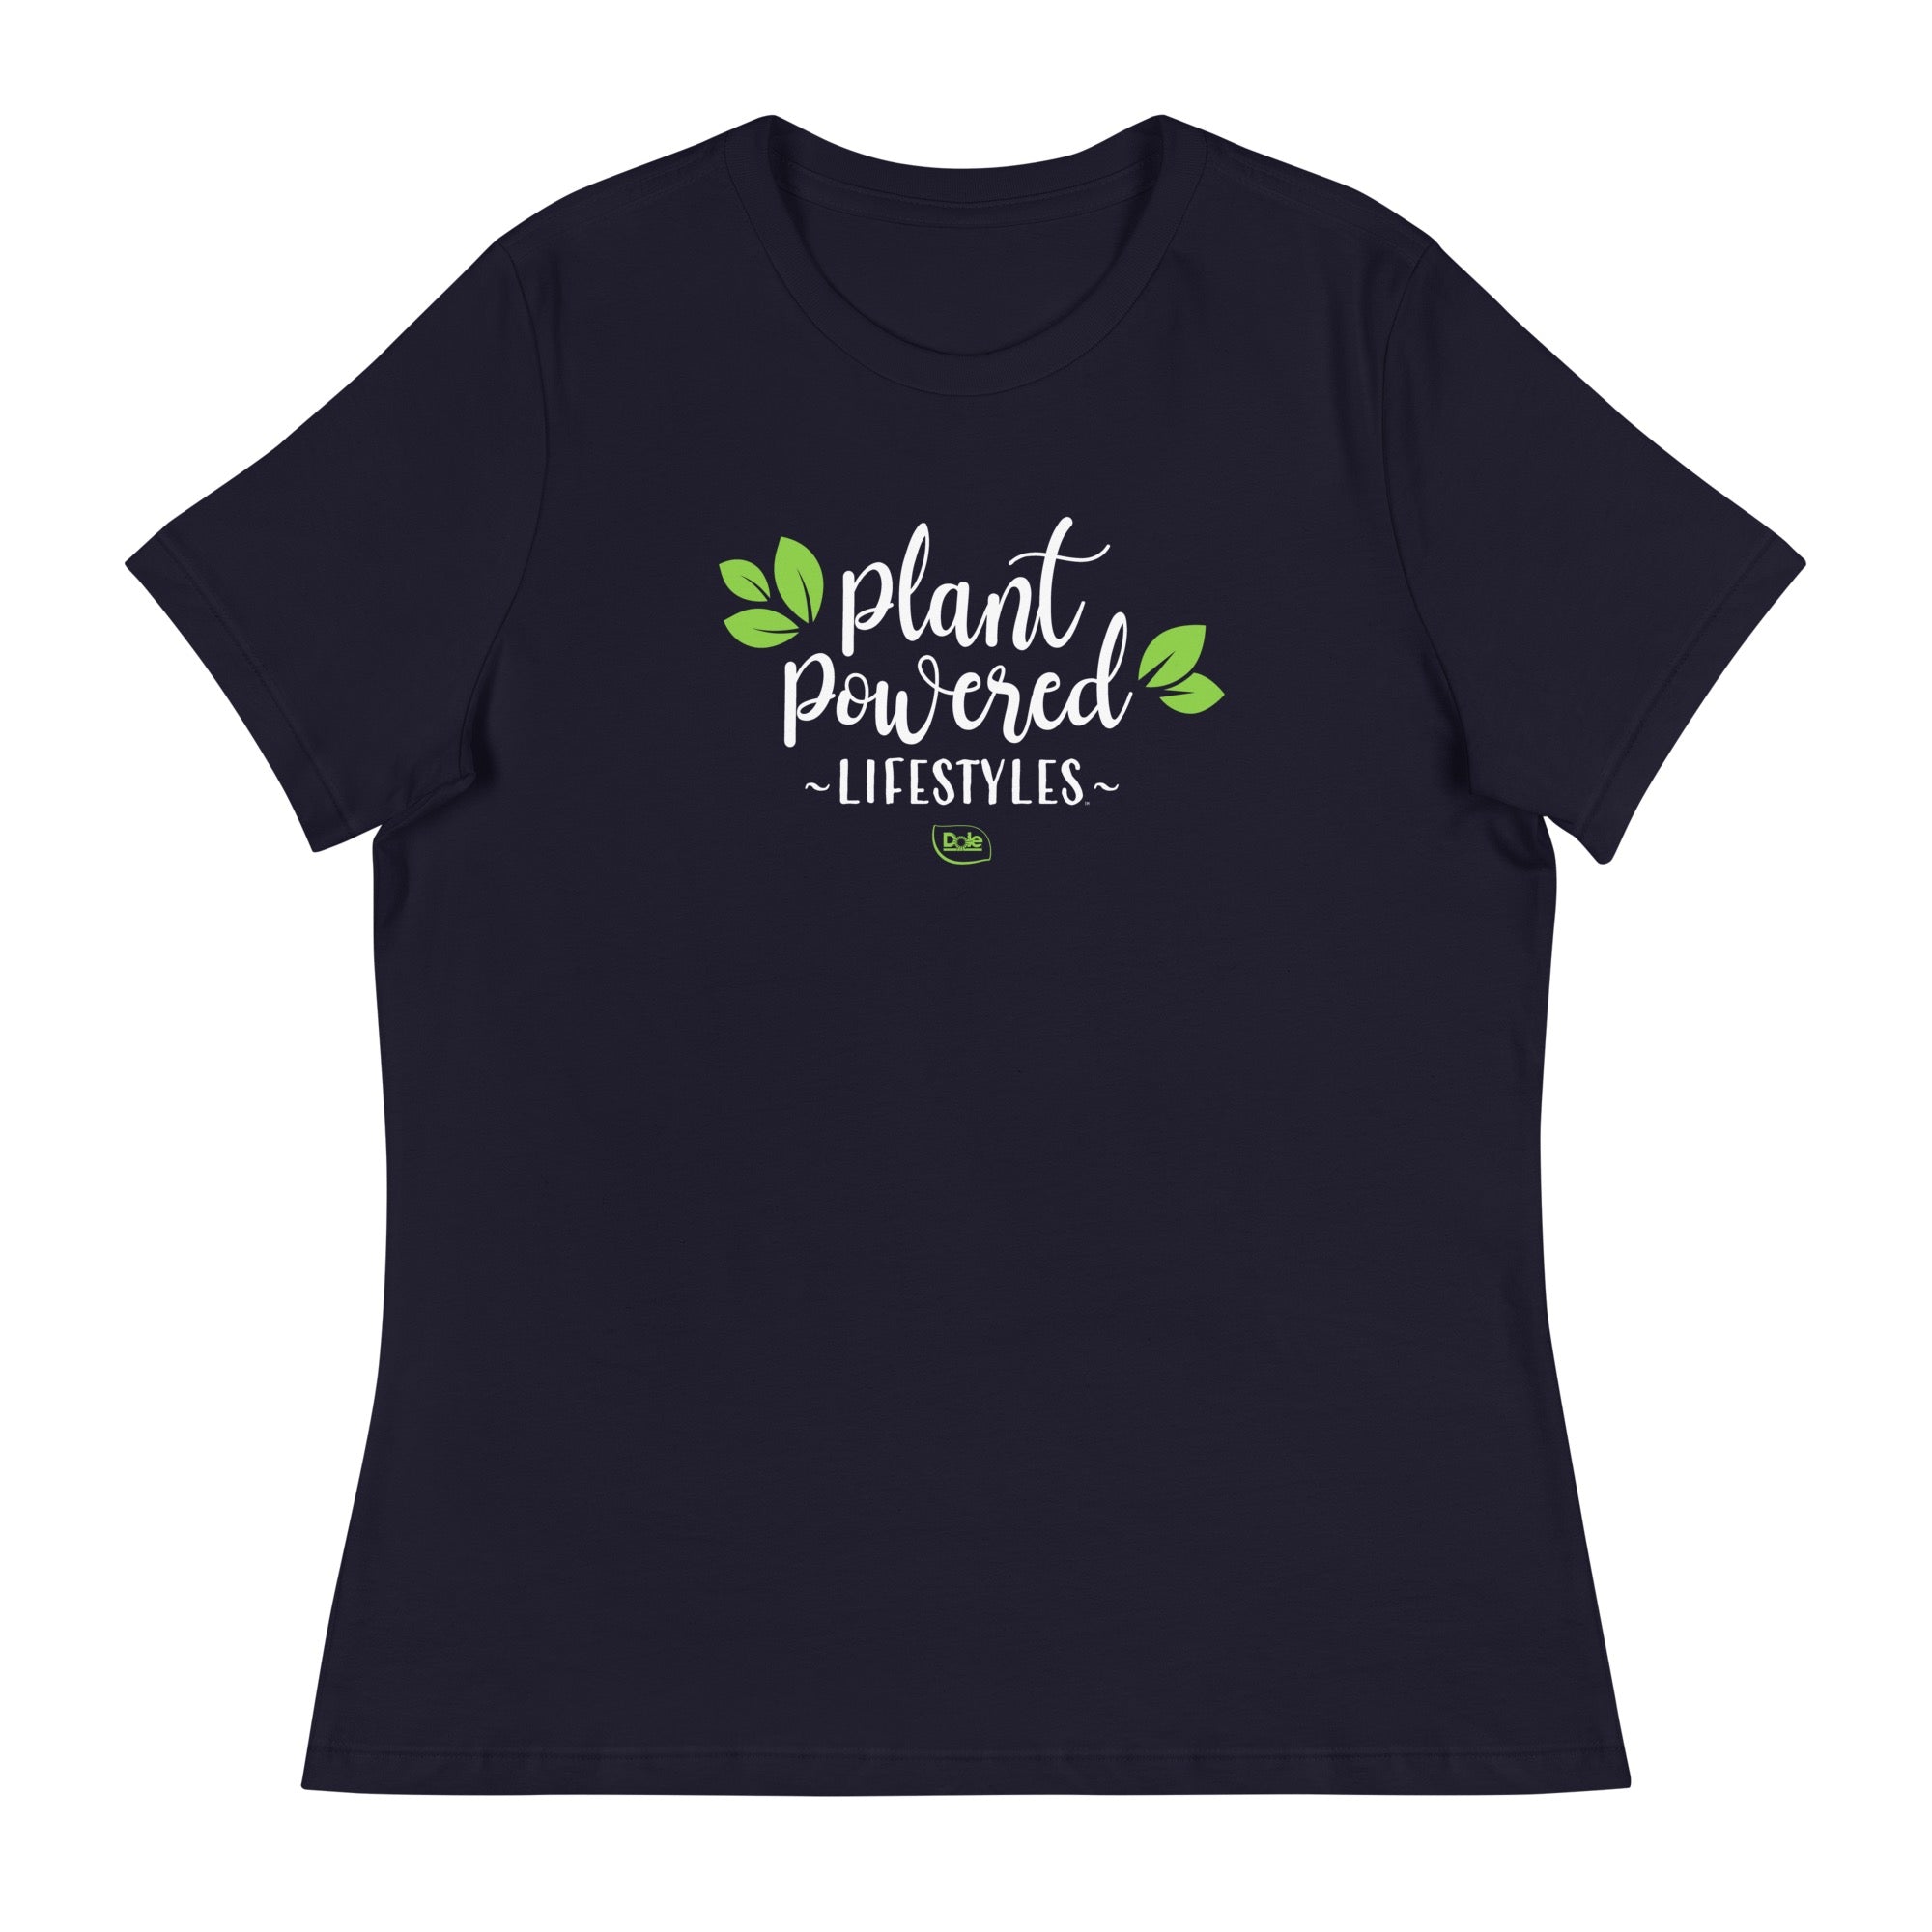 Dole Plant Powered Lifestyles Women's T-Shirt-6